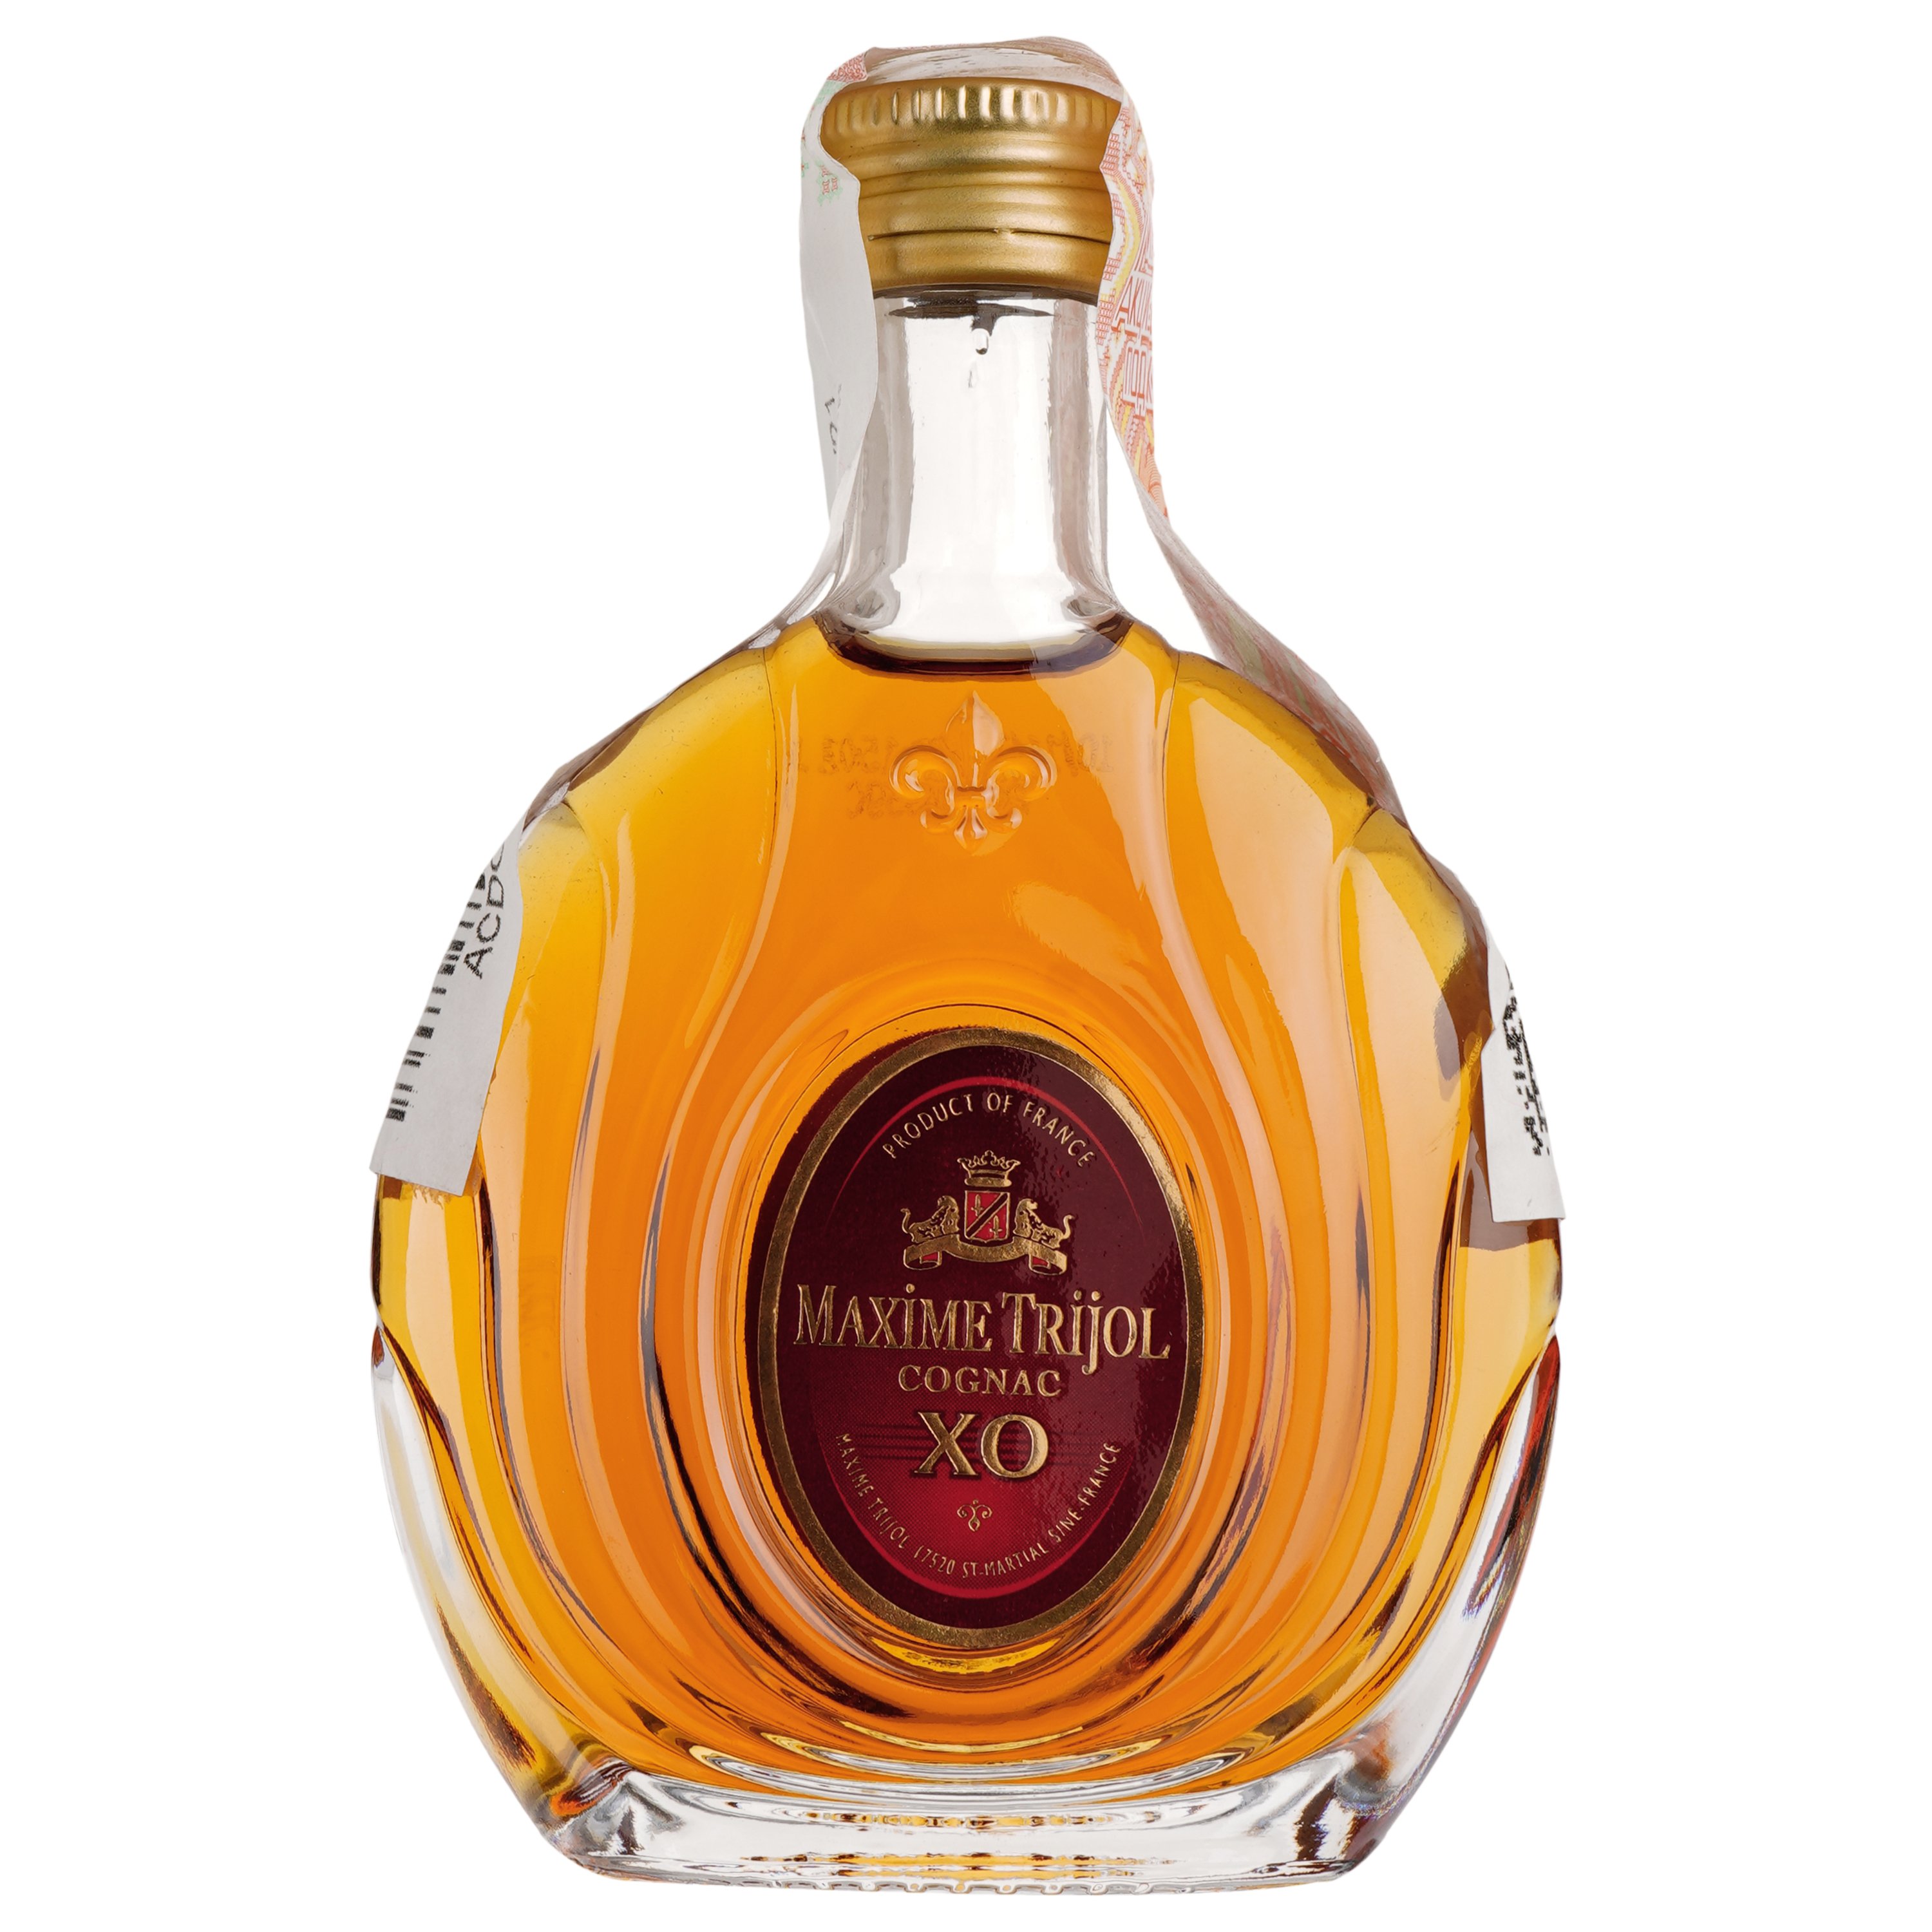 Коньяк Maxime Trijol cognac ХО, 40%, 0,05 л - фото 1